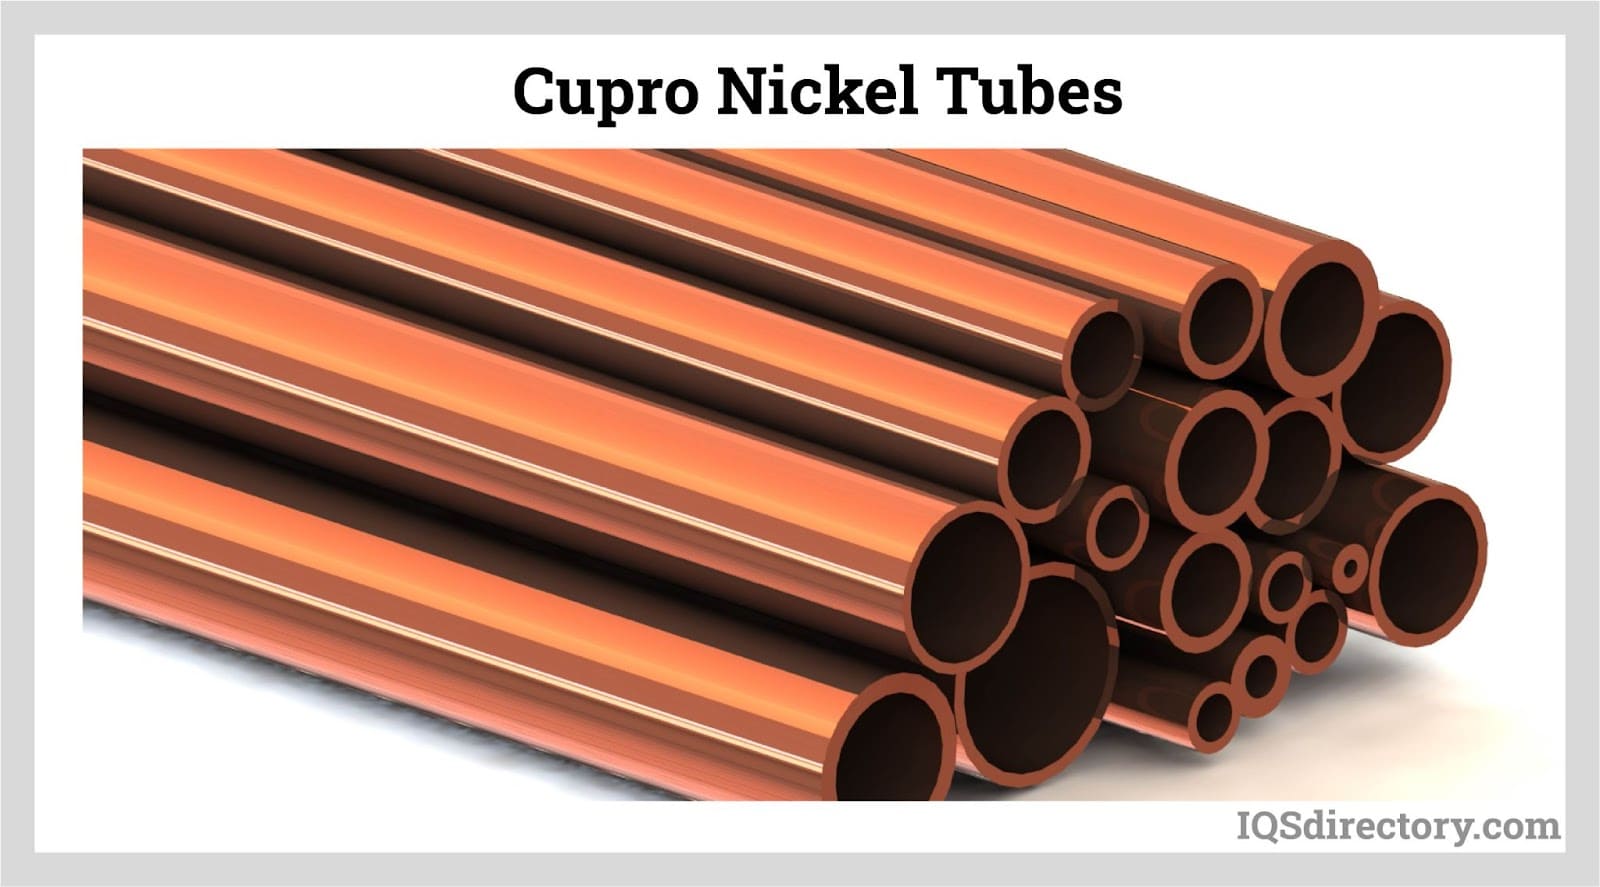 Cupro Nickel Tubes